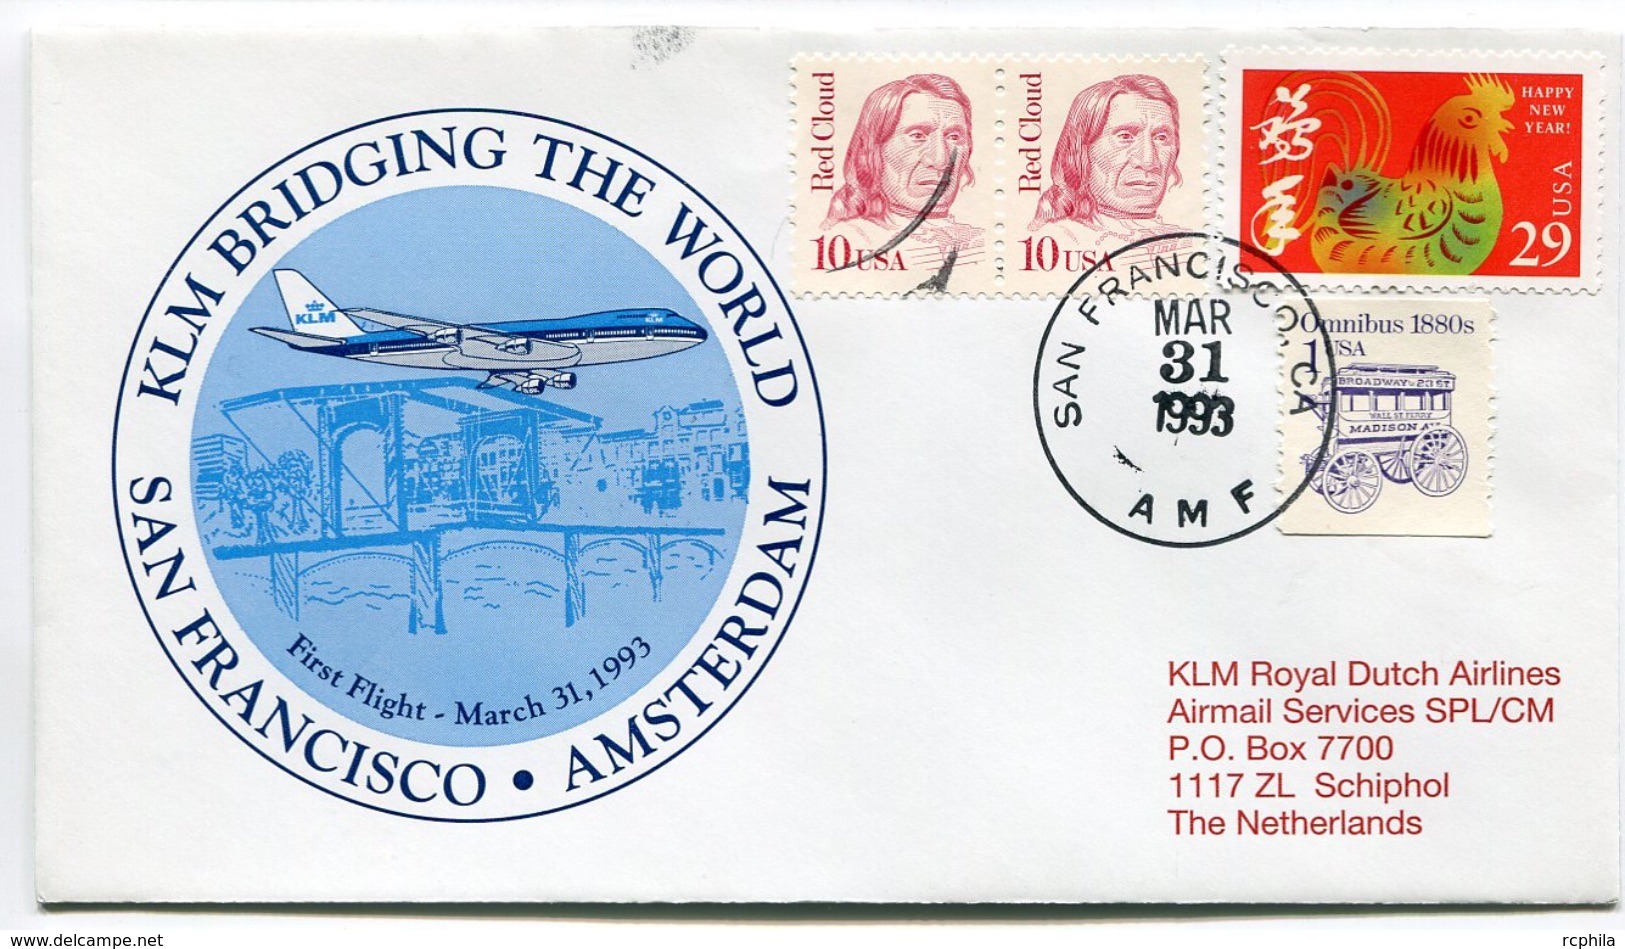 RC 6694 PAYS-BAS KLM 1993 1er VOL SAN FRANCISCO USA - AMSTERDAM FFC NETHERLANDS LETTRE COVER - Poste Aérienne